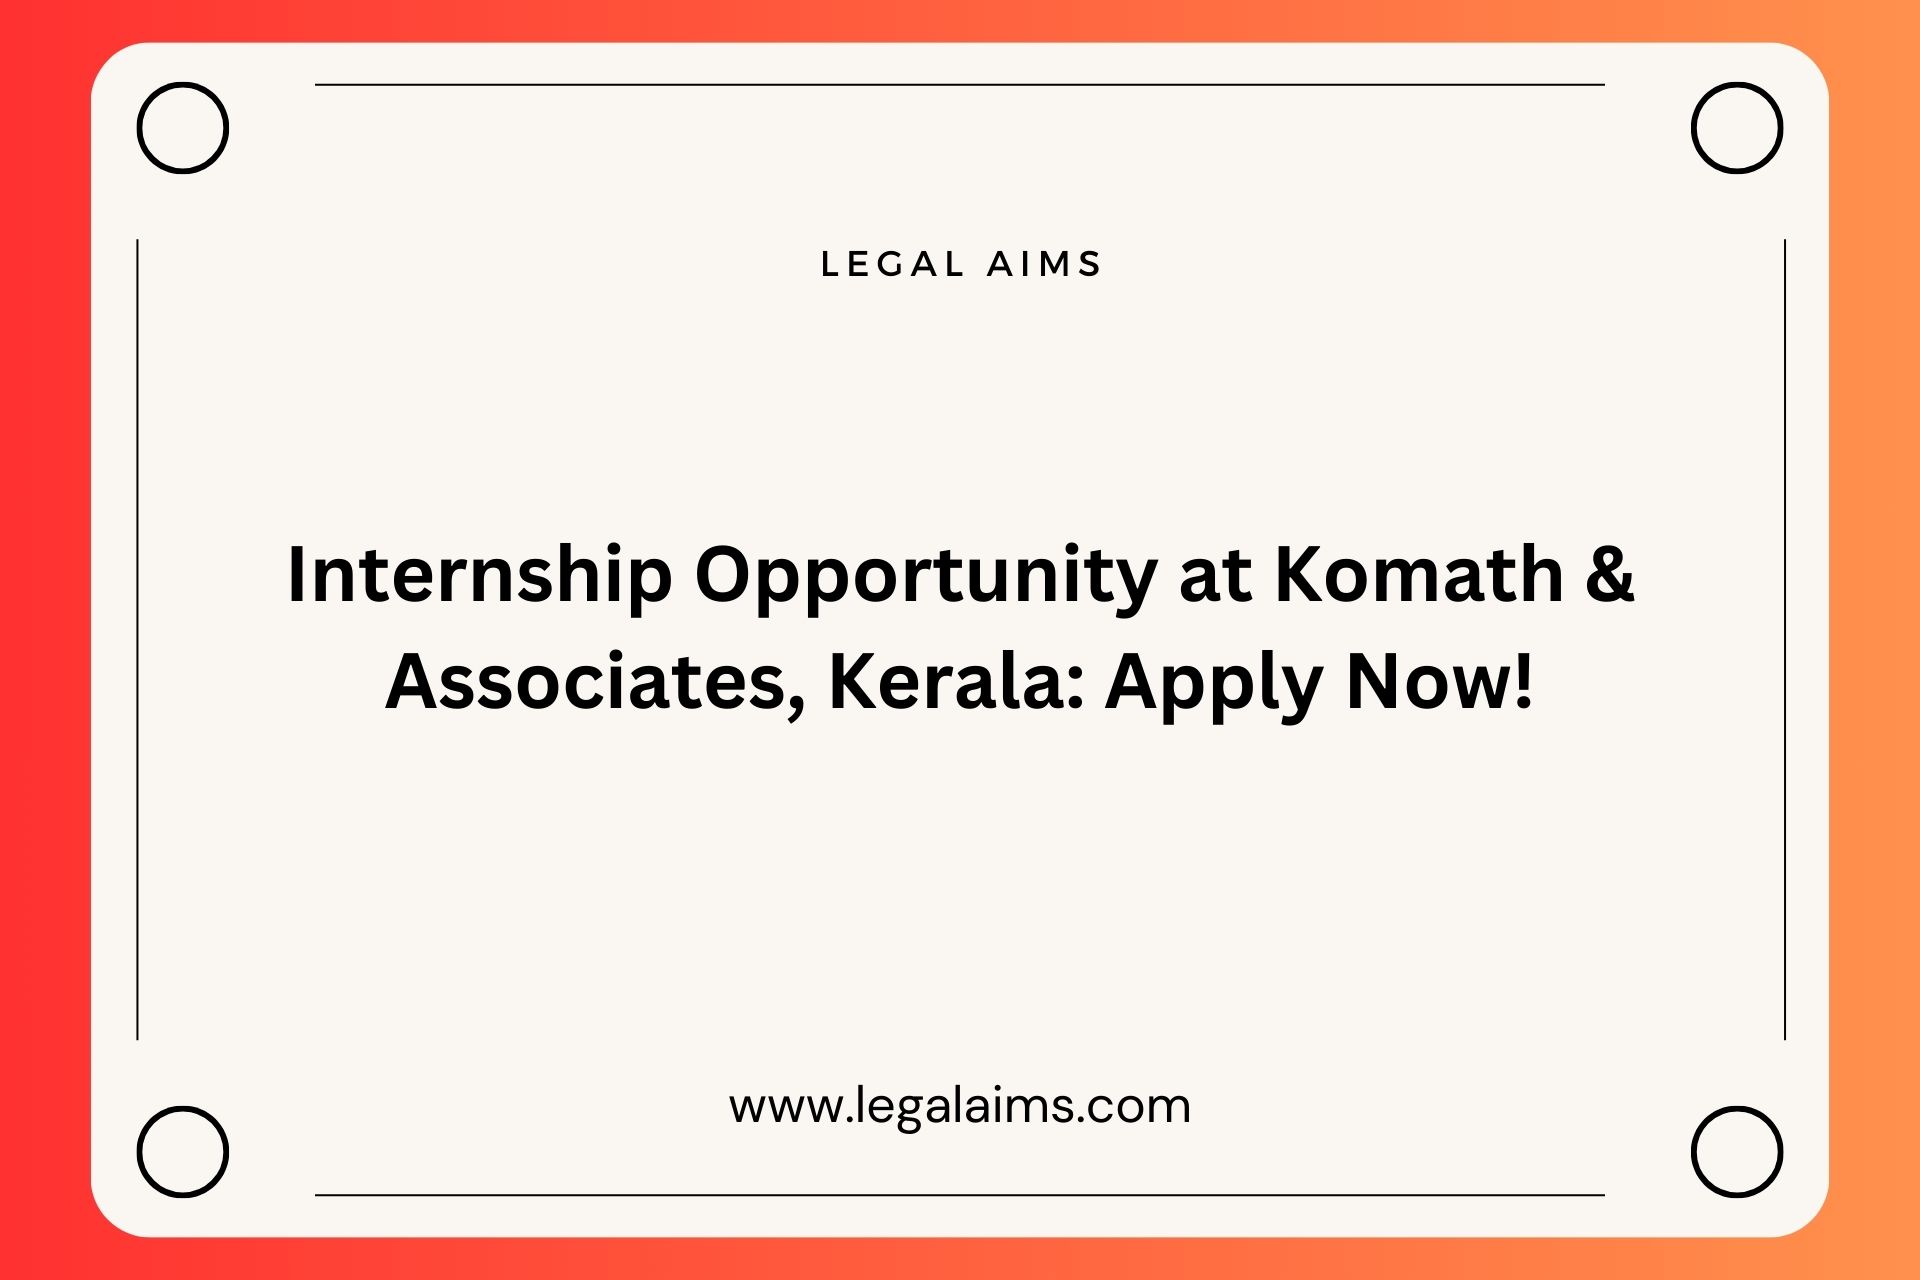 Internship Opportunity at Komath & Associates, Kerala Apply Now!